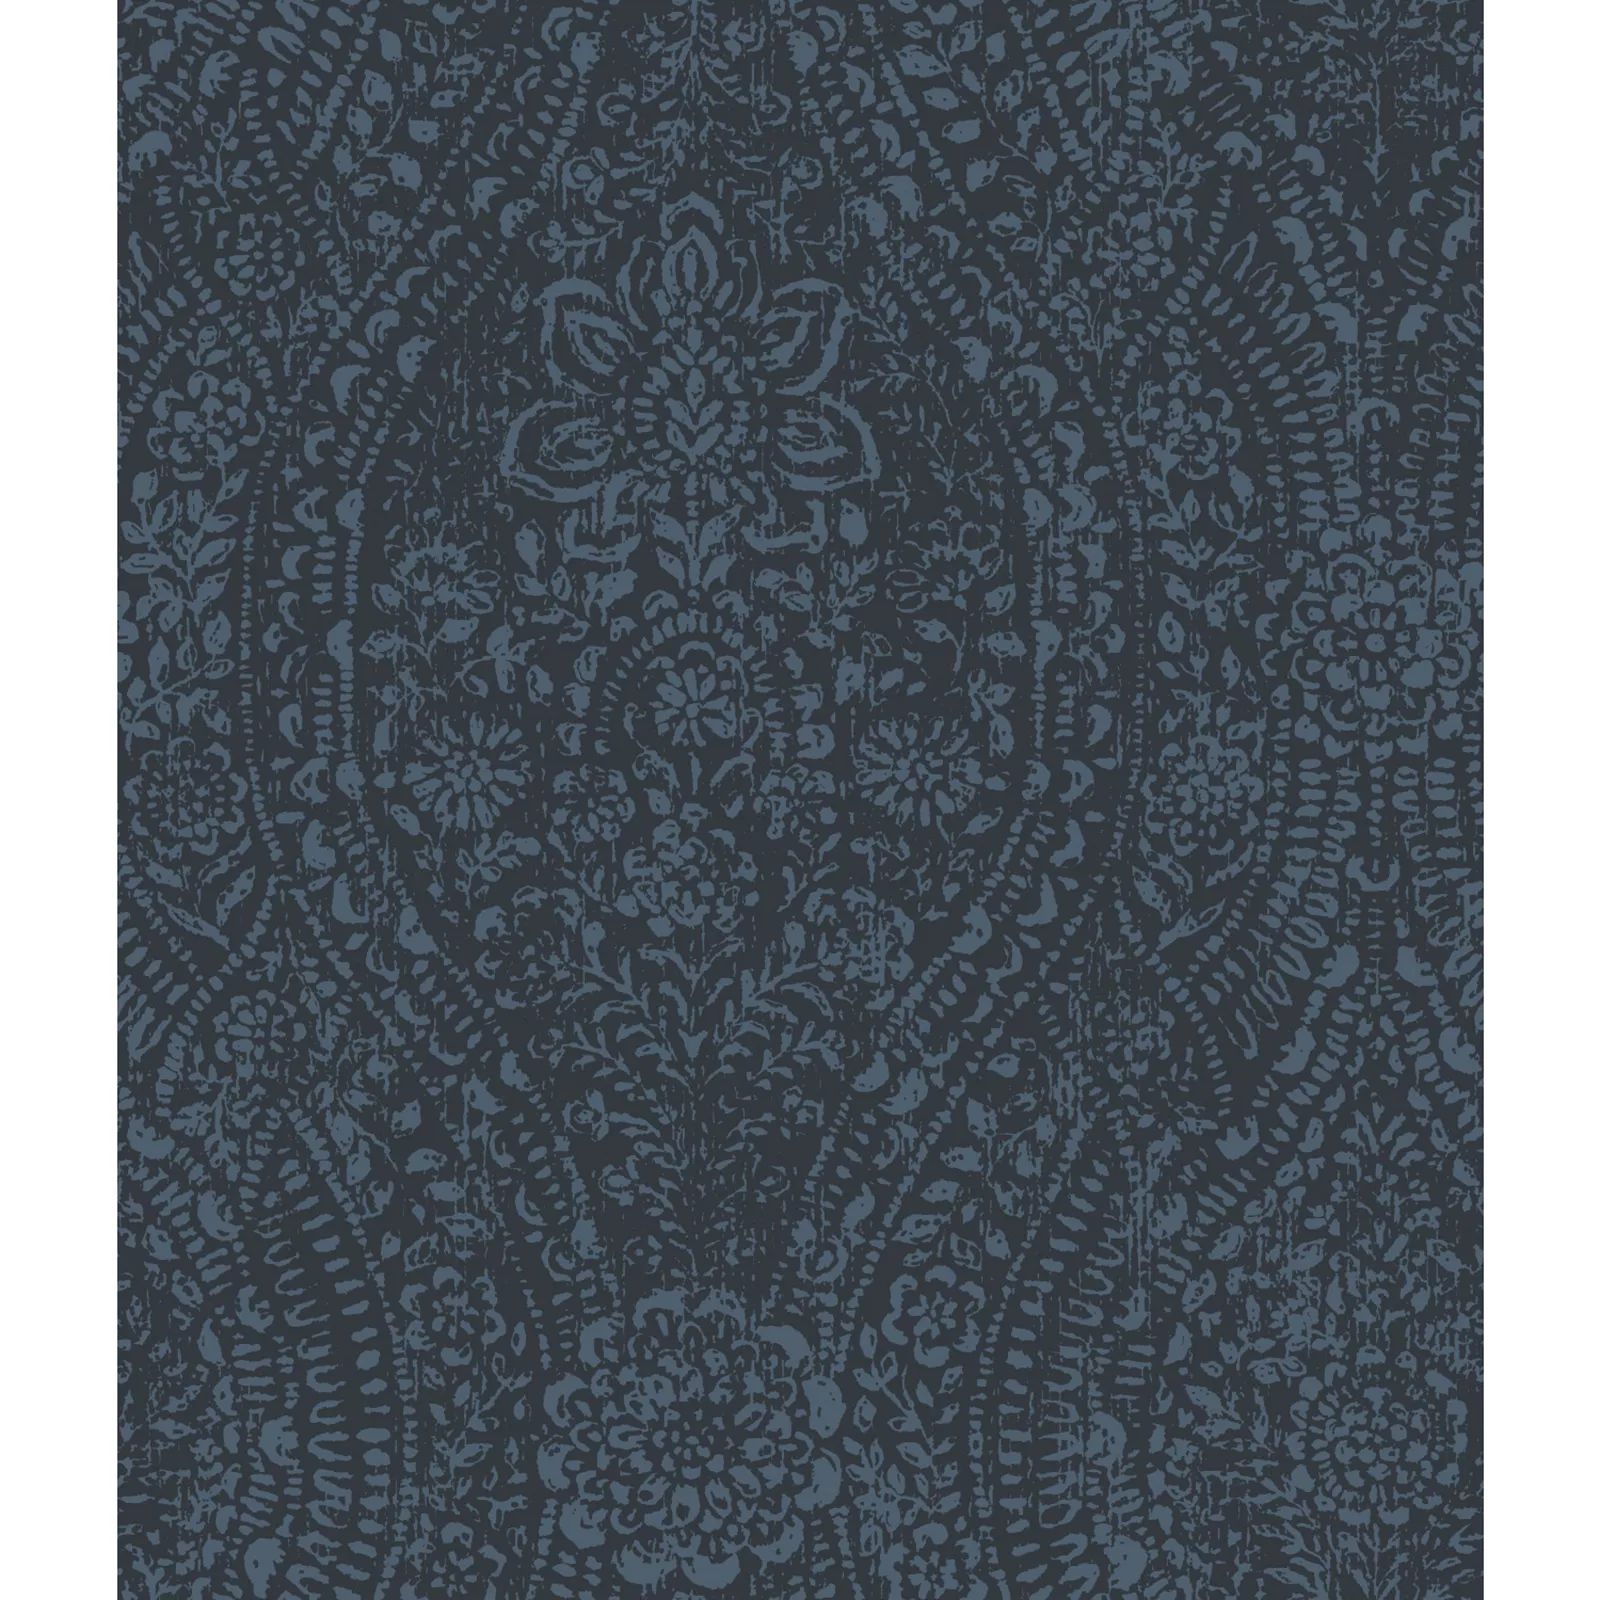 RoomMates Ornate Ogee Peel & Stick Wallpaper, Black | Kohl's